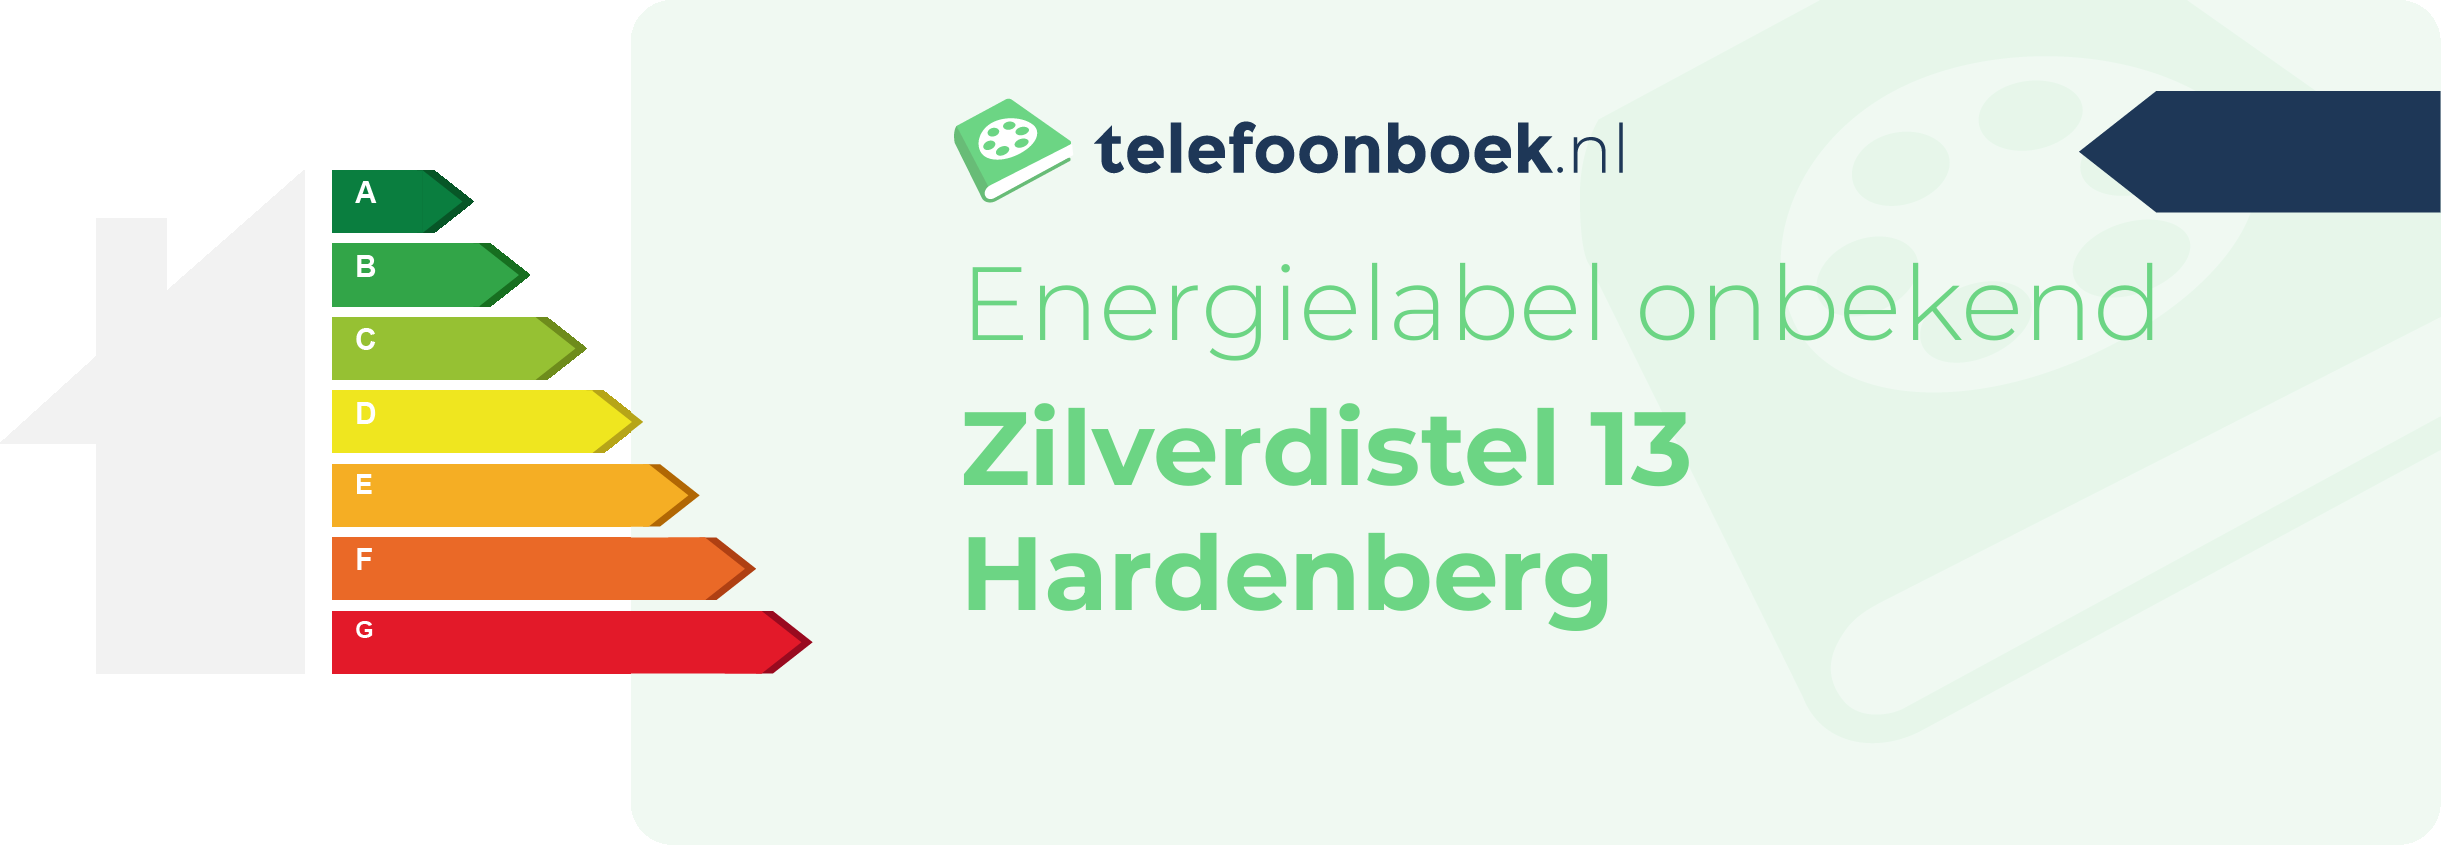 Energielabel Zilverdistel 13 Hardenberg